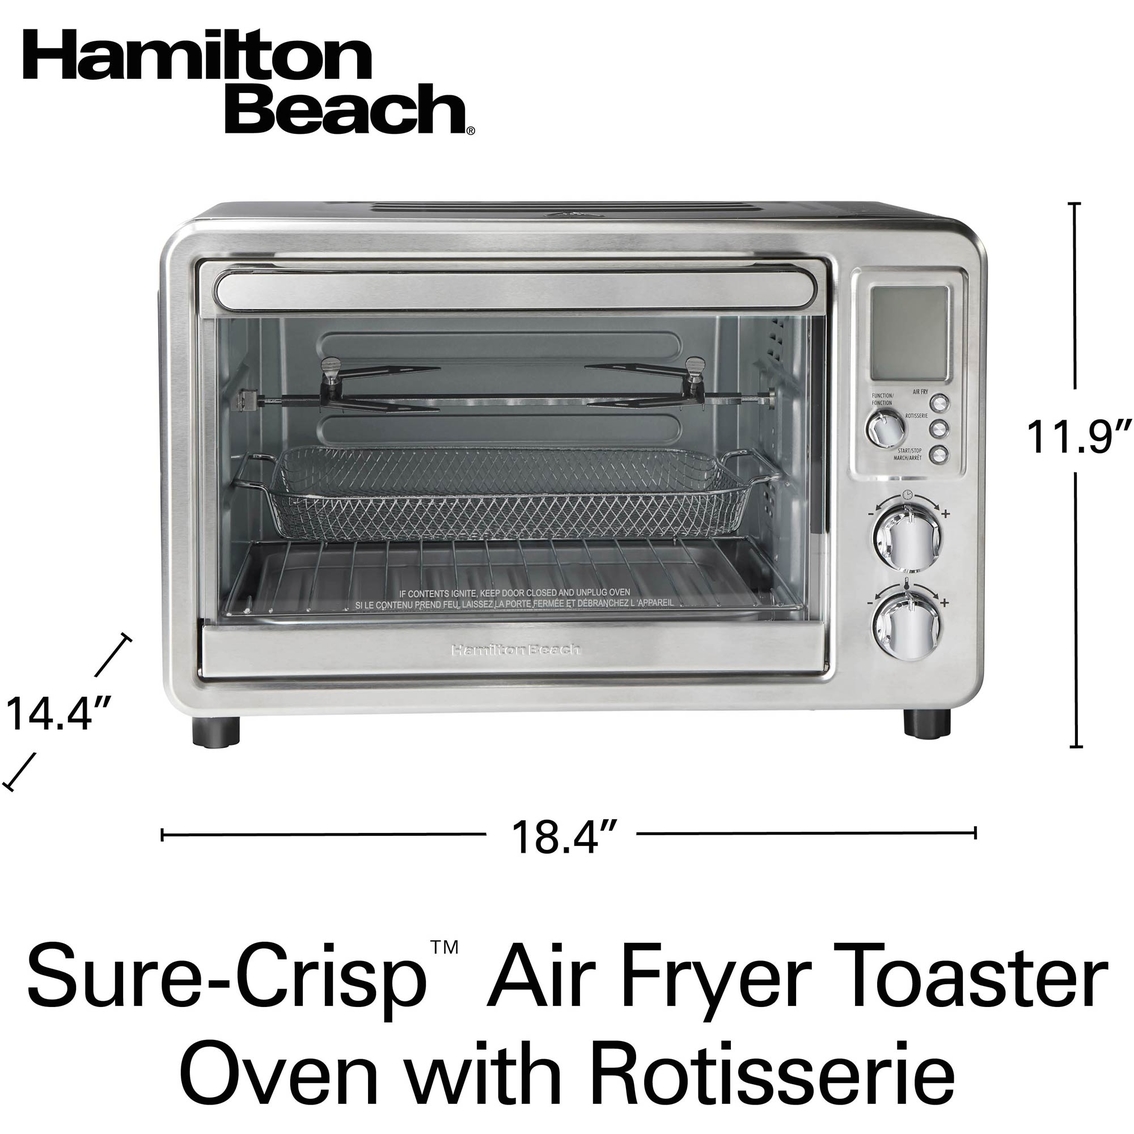 Hamilton Beach Sure-Crisp Digital Air Fryer Toaster Oven with Rotisserie - Image 6 of 6